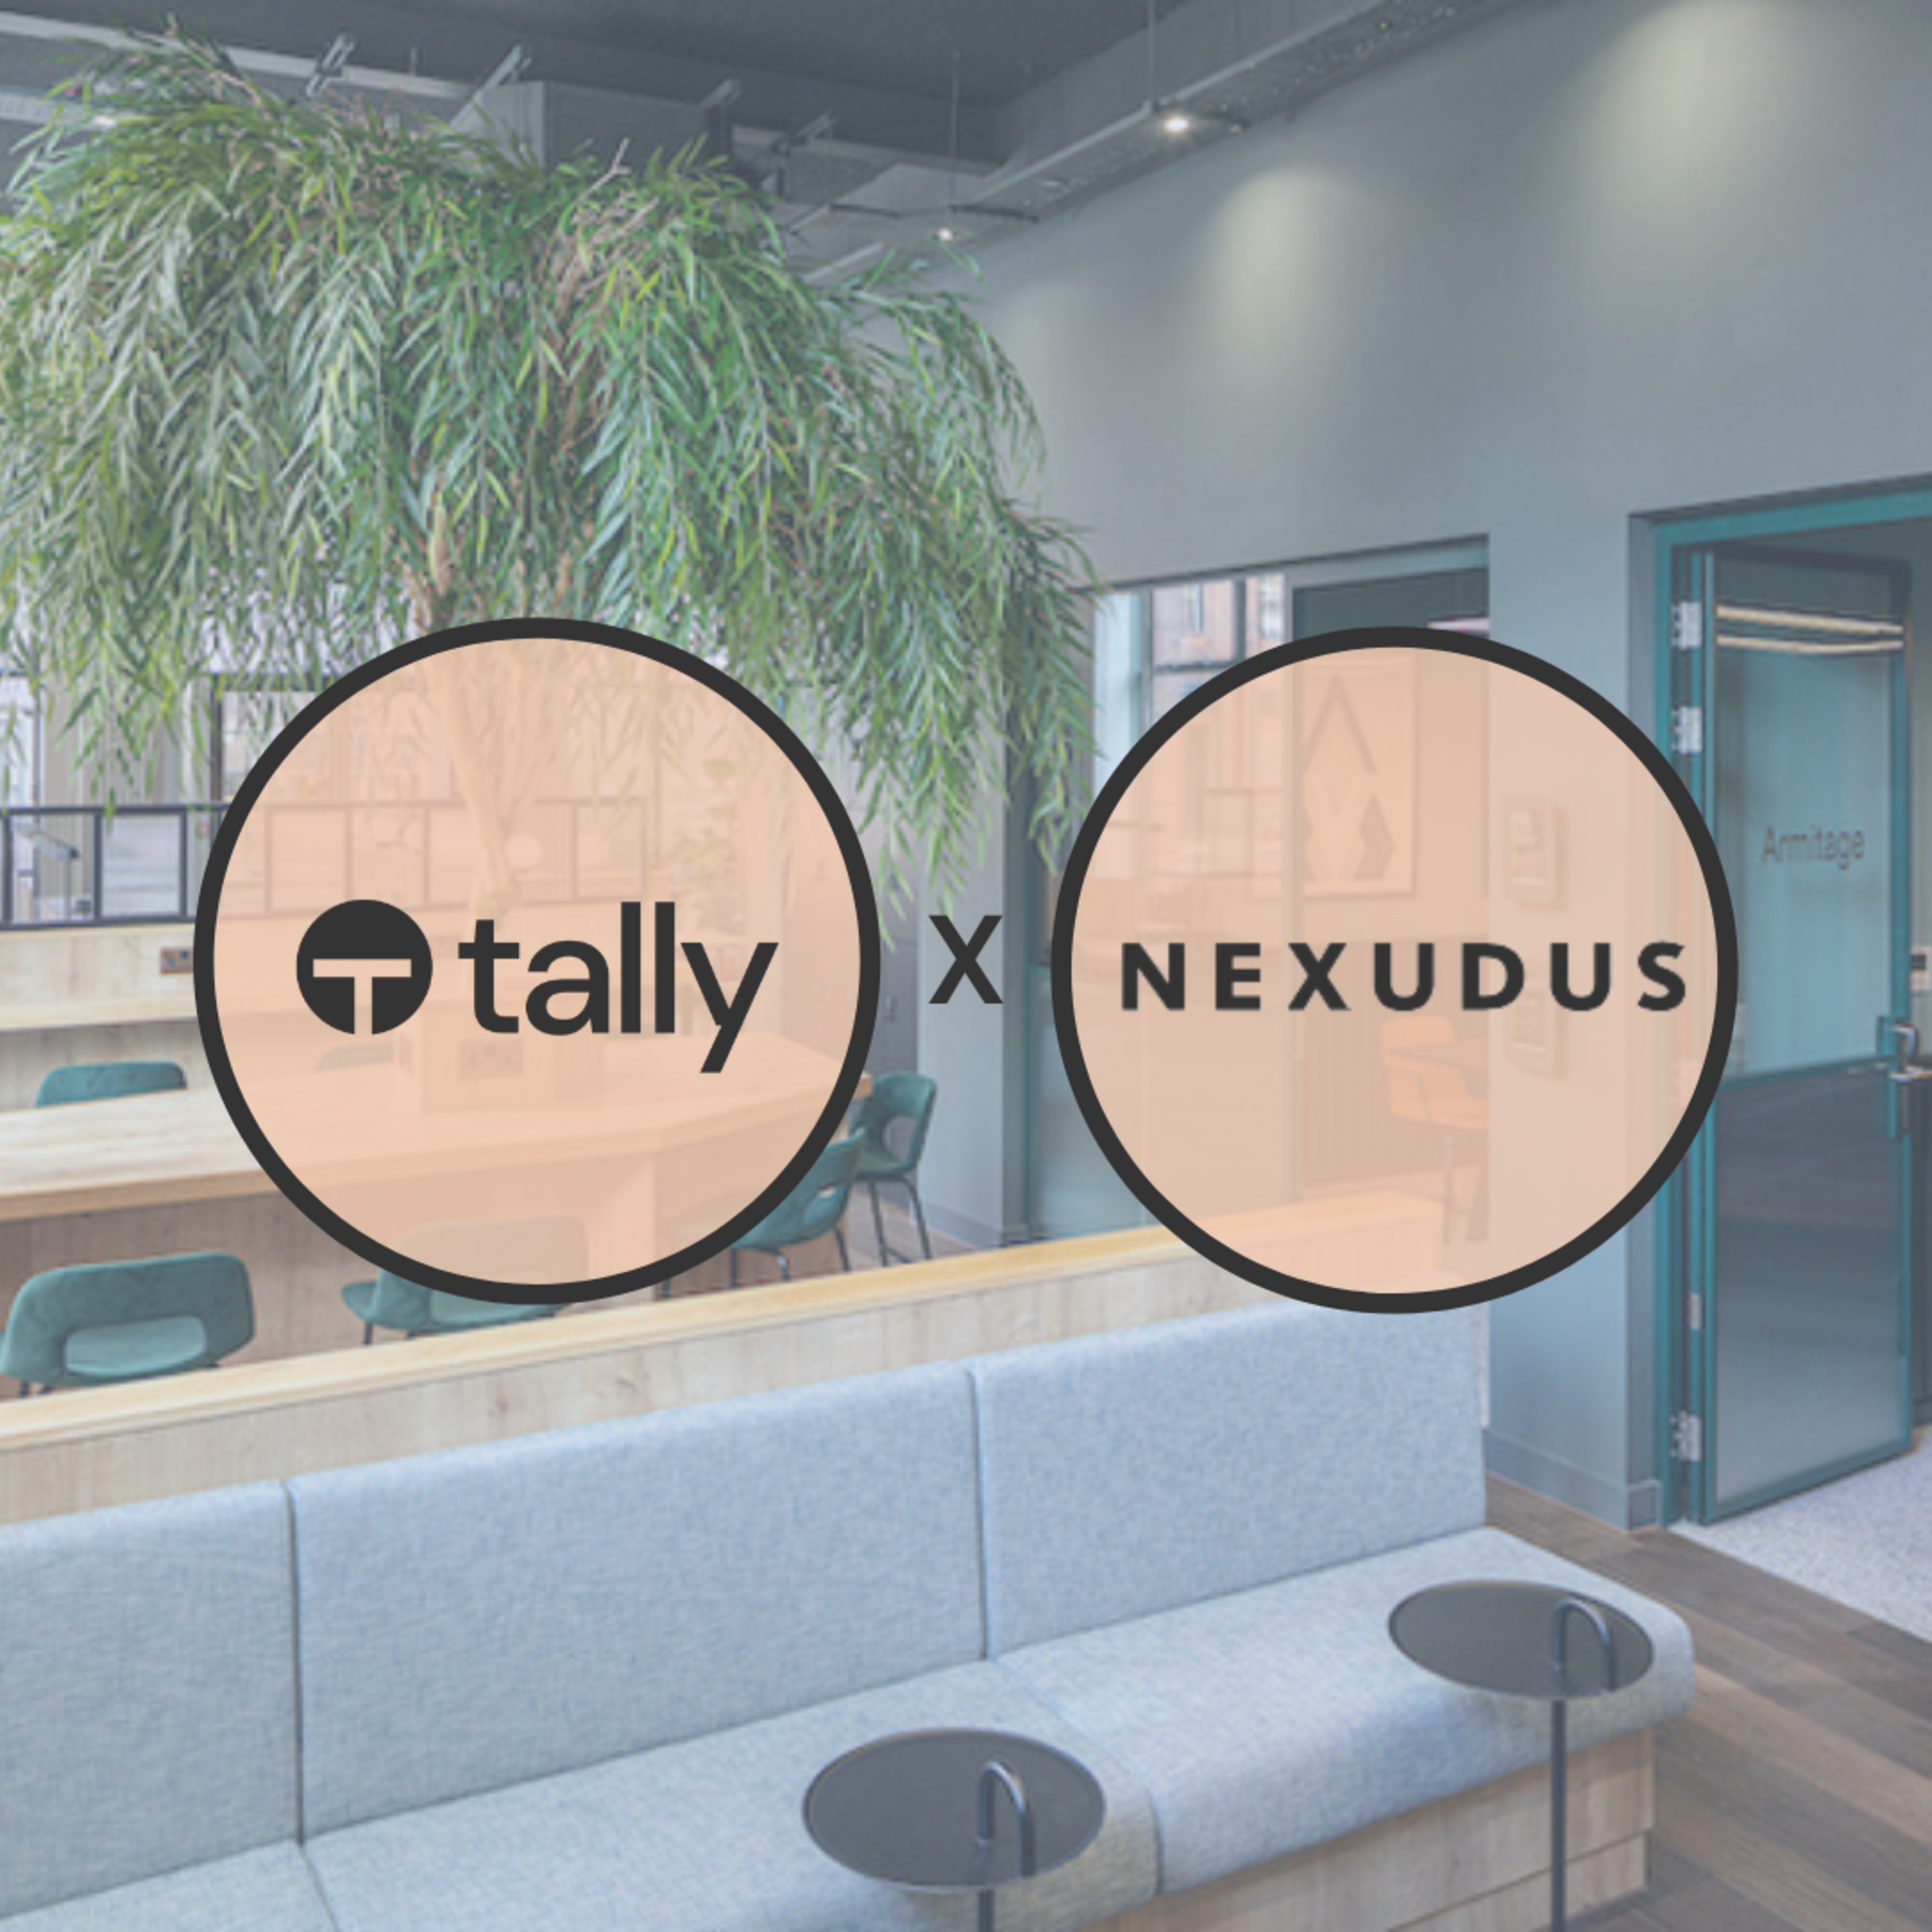 Nexudus and Tally Workspace logos